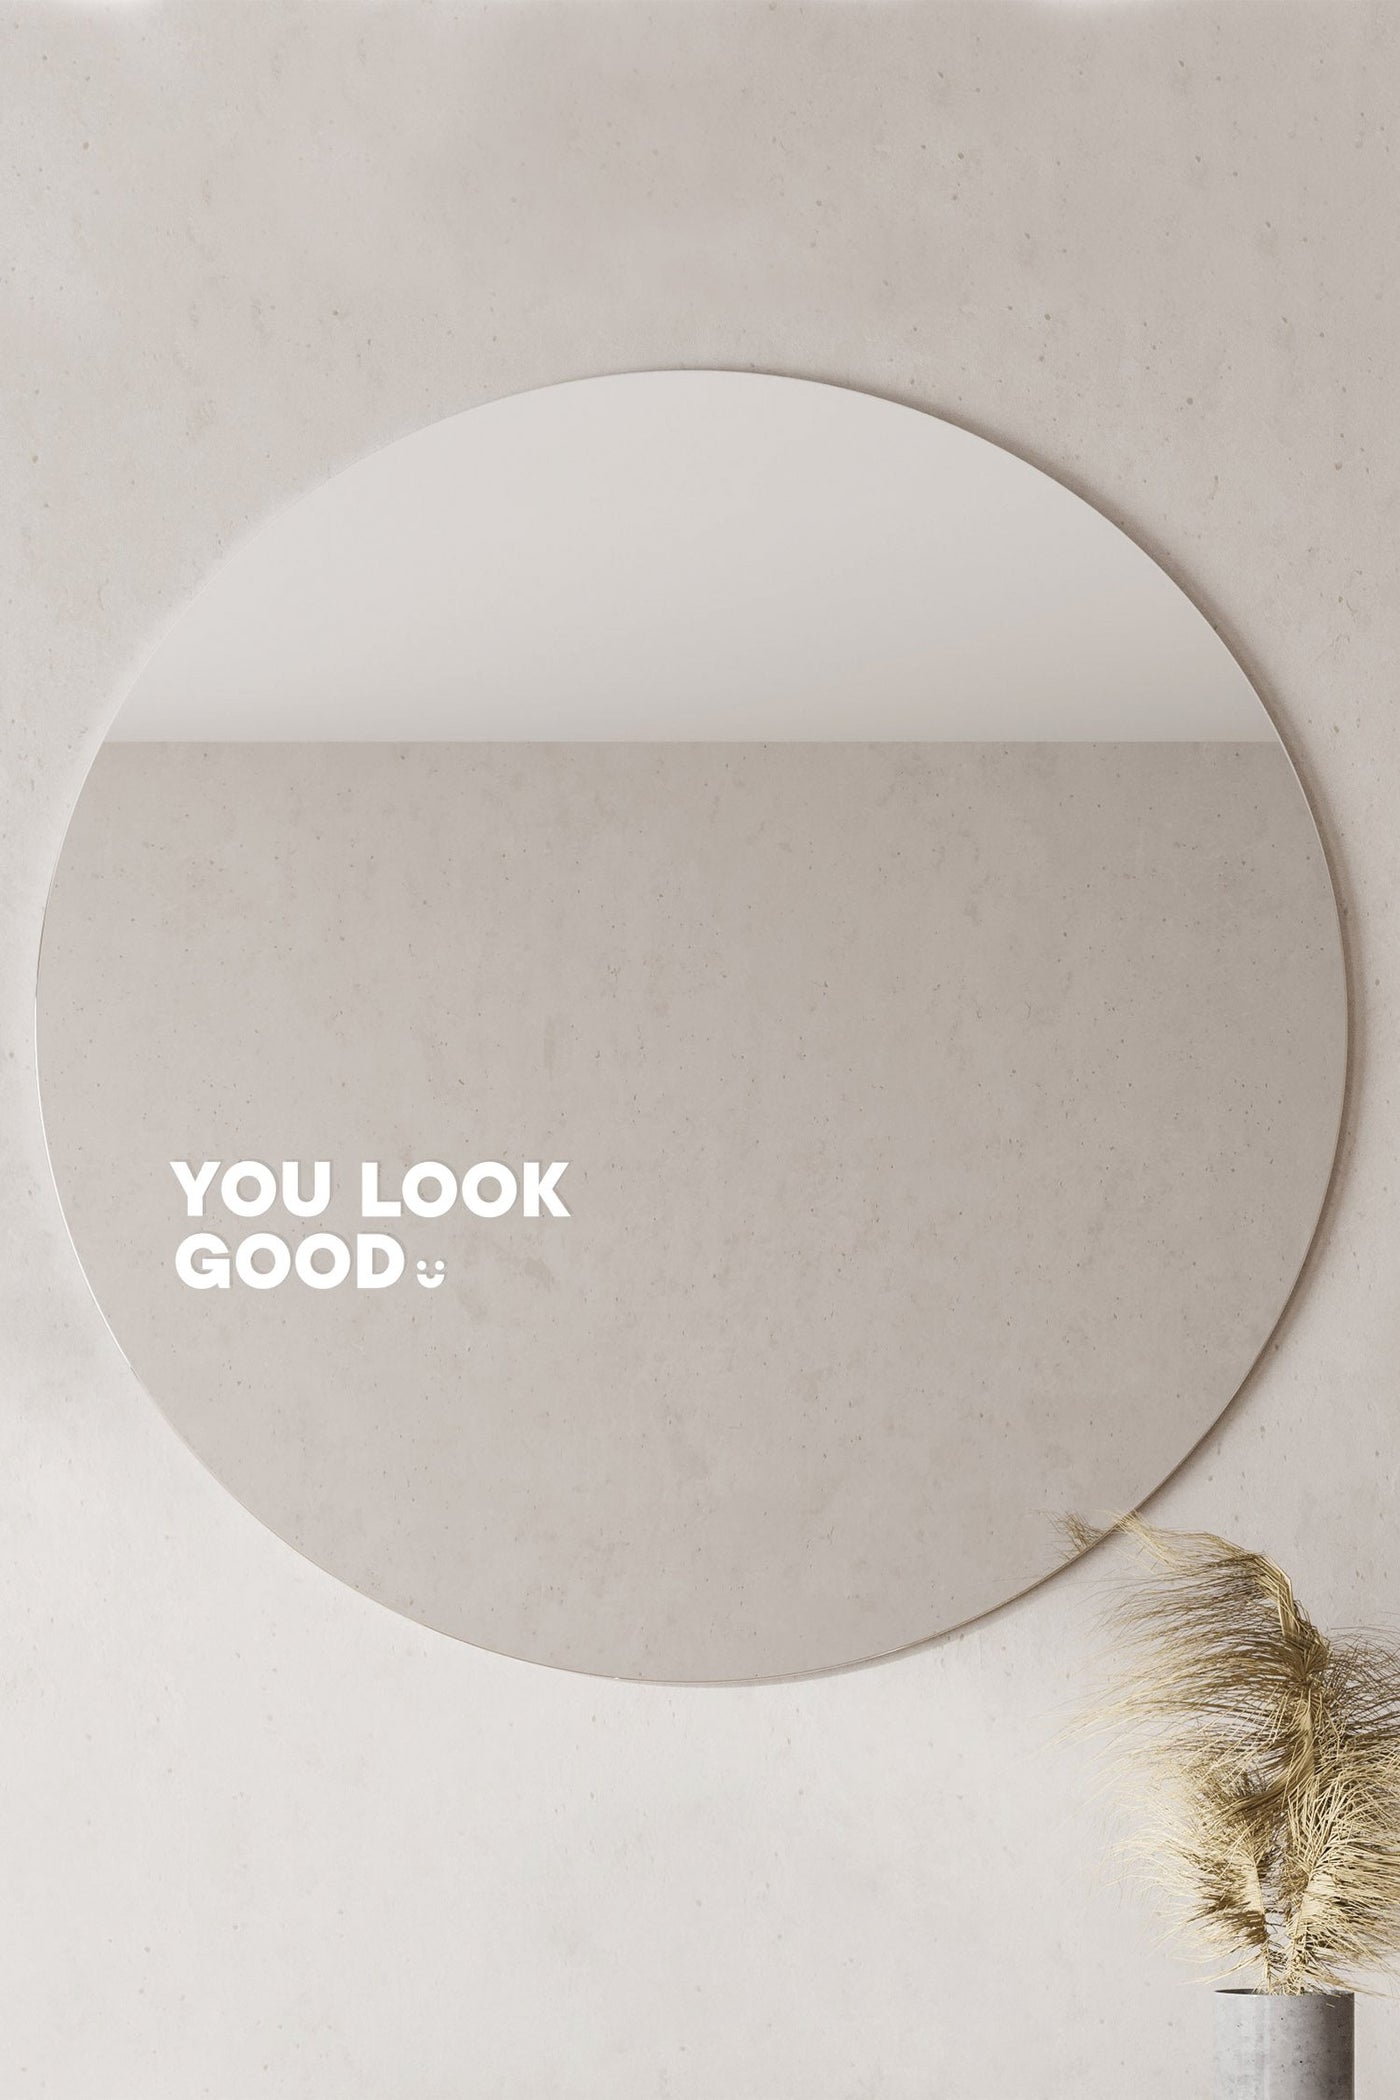 YOU LOOK GOOD. - Affirmation Mirror Sticker Affirmation Stickers Selfawear 